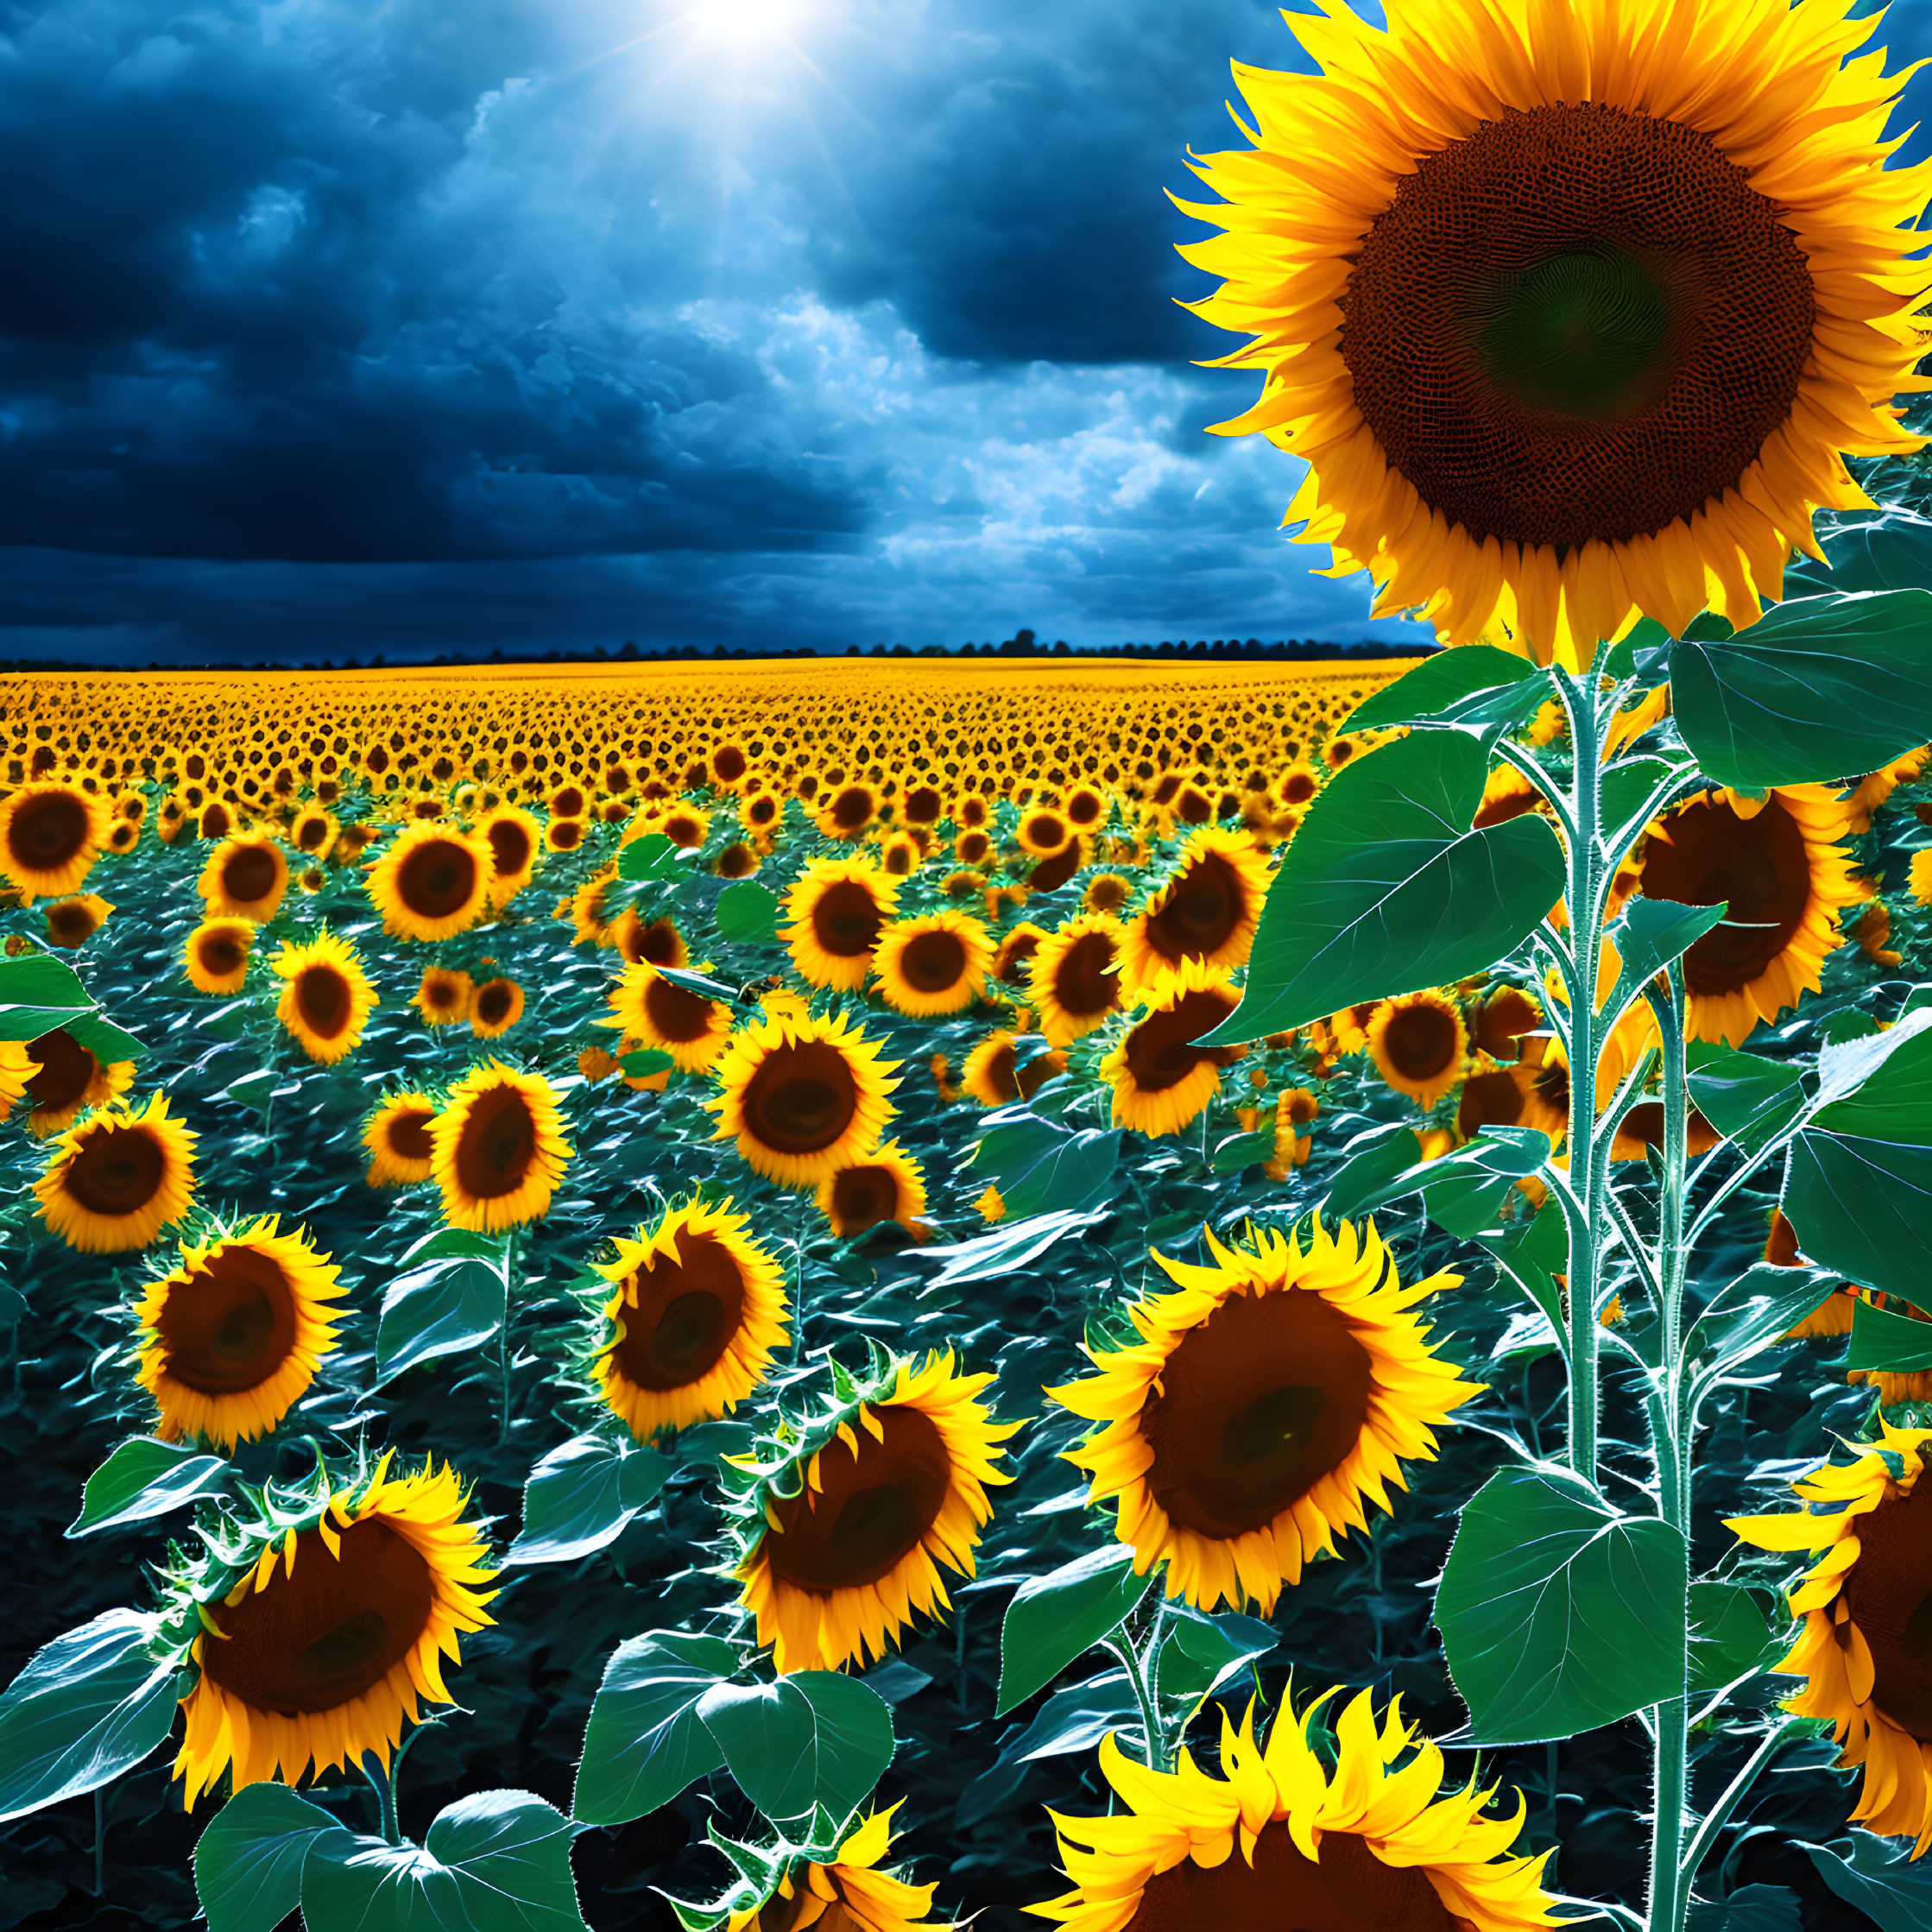 Sunflowers field under dramatic cloudy sky with sun peeking through